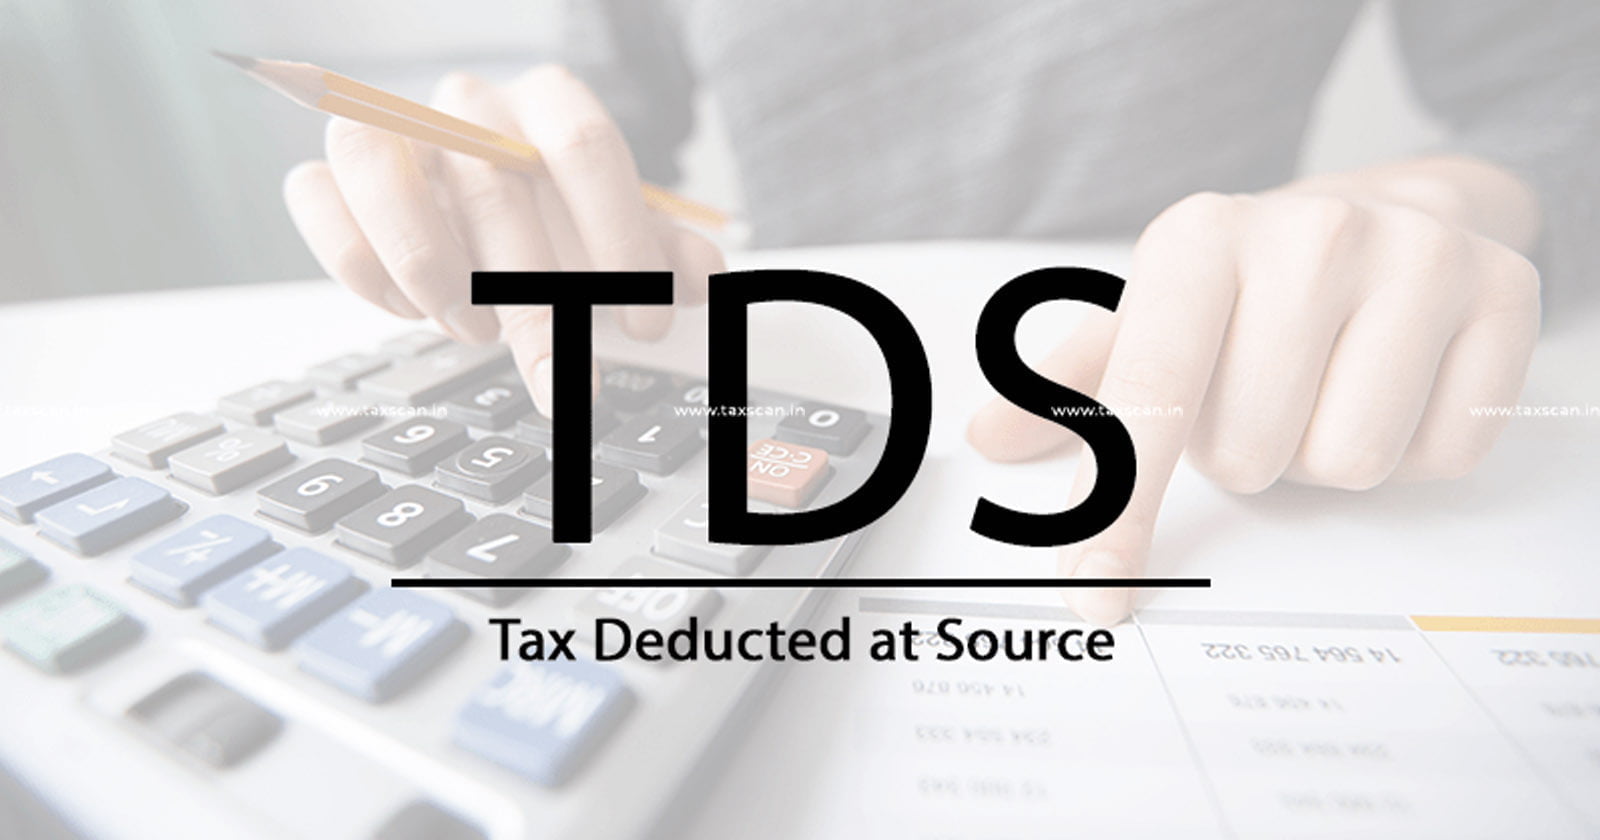 Madras High Court - TDS - TDS deduction - Income Tax - Income tax news - Tax deduction at source - taxscan